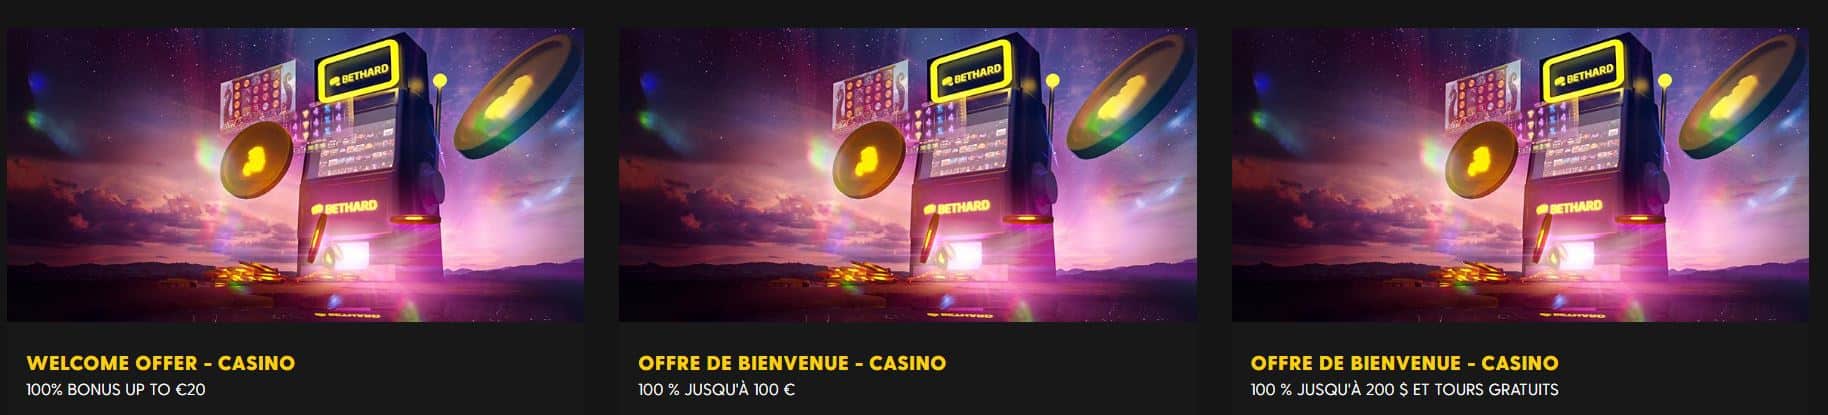 Bethard - Bonus de bienvenue - Meilleur casino eCheck